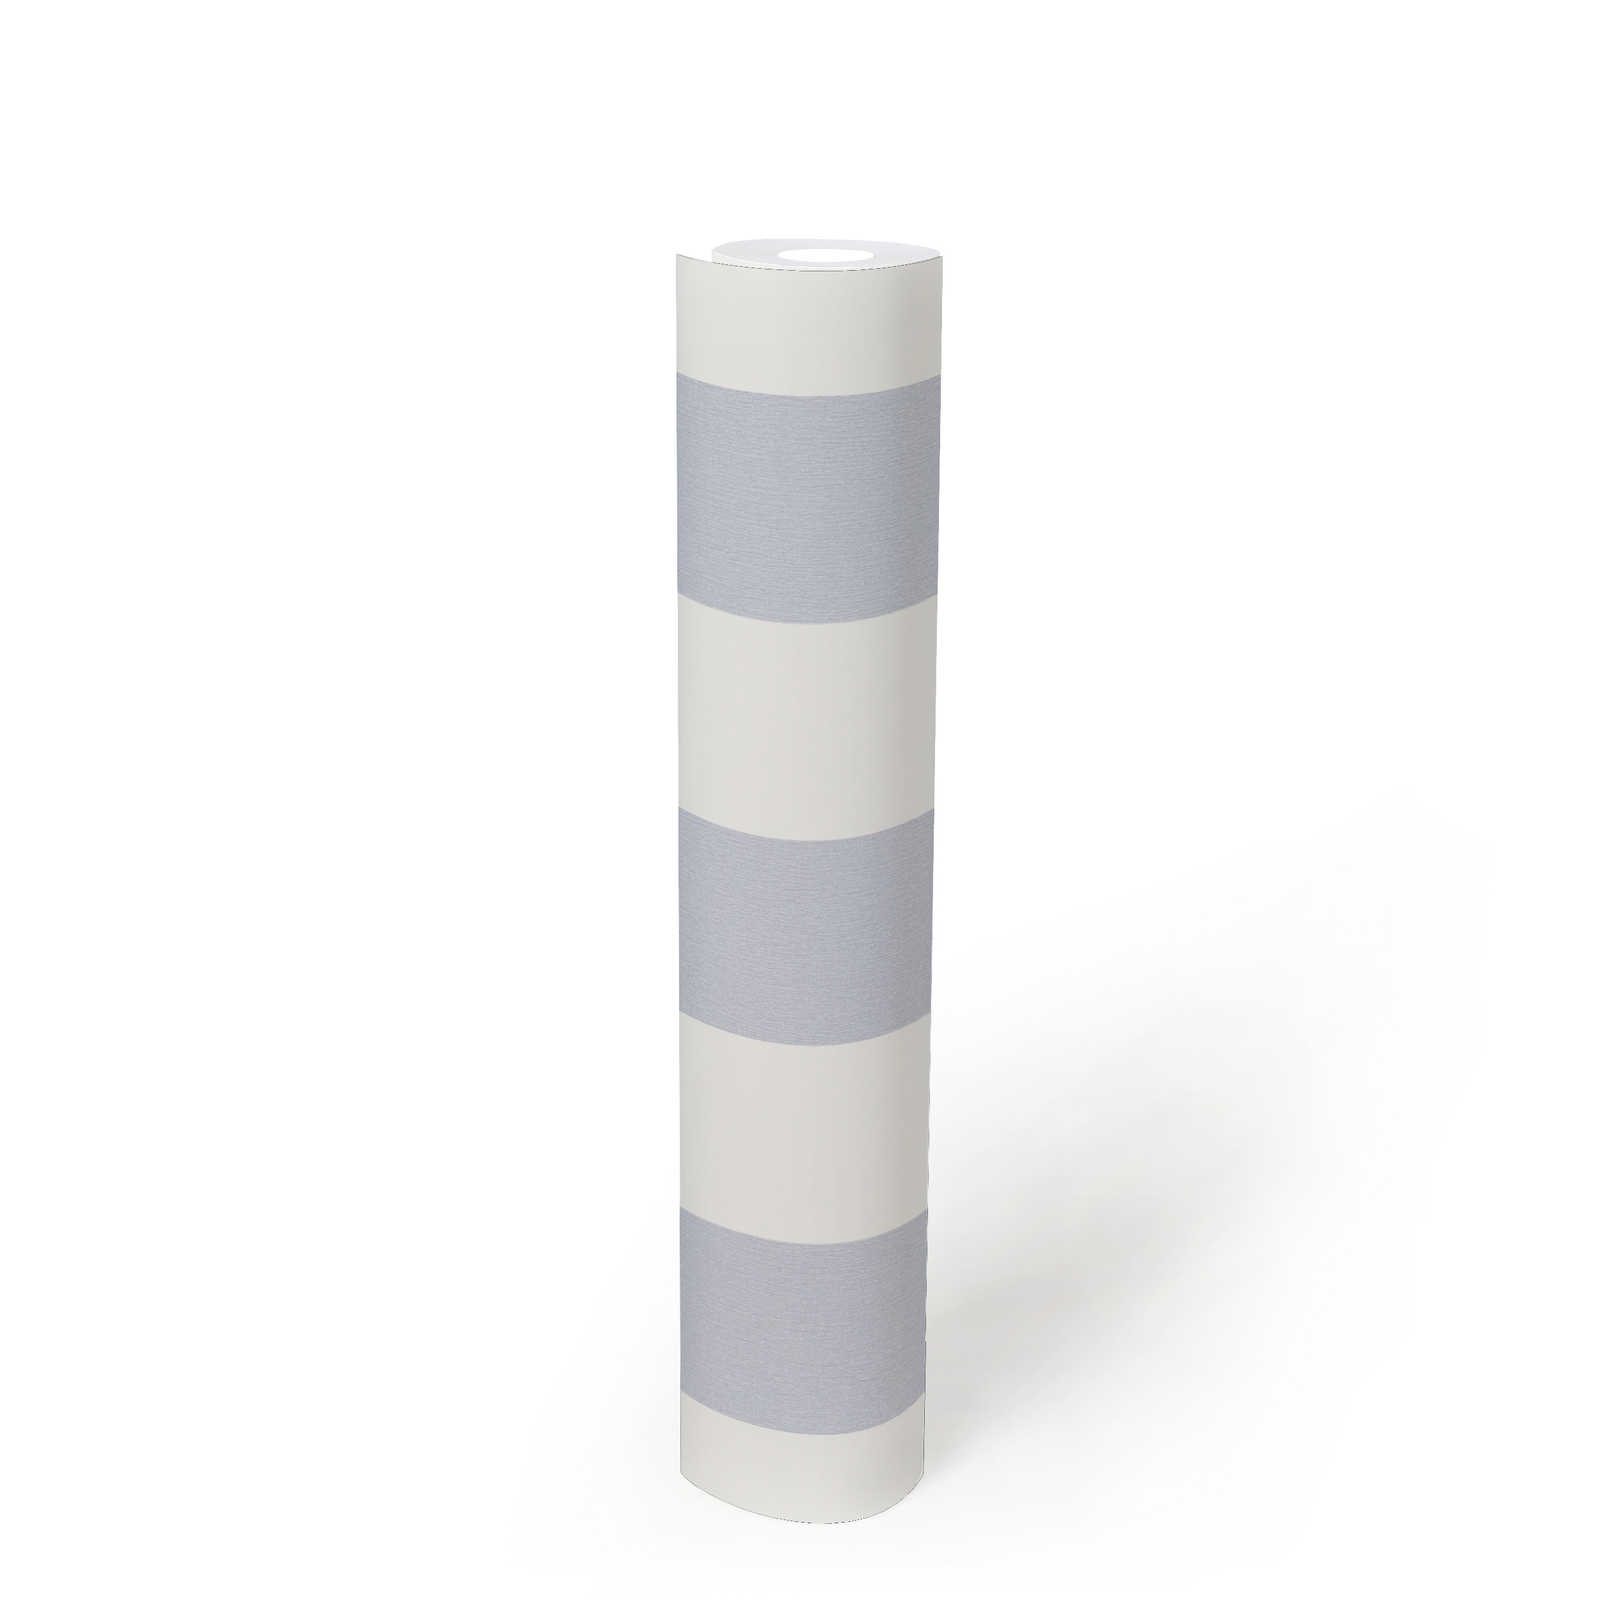             Wallpaper Nursery vertical stripes - grey, white
        